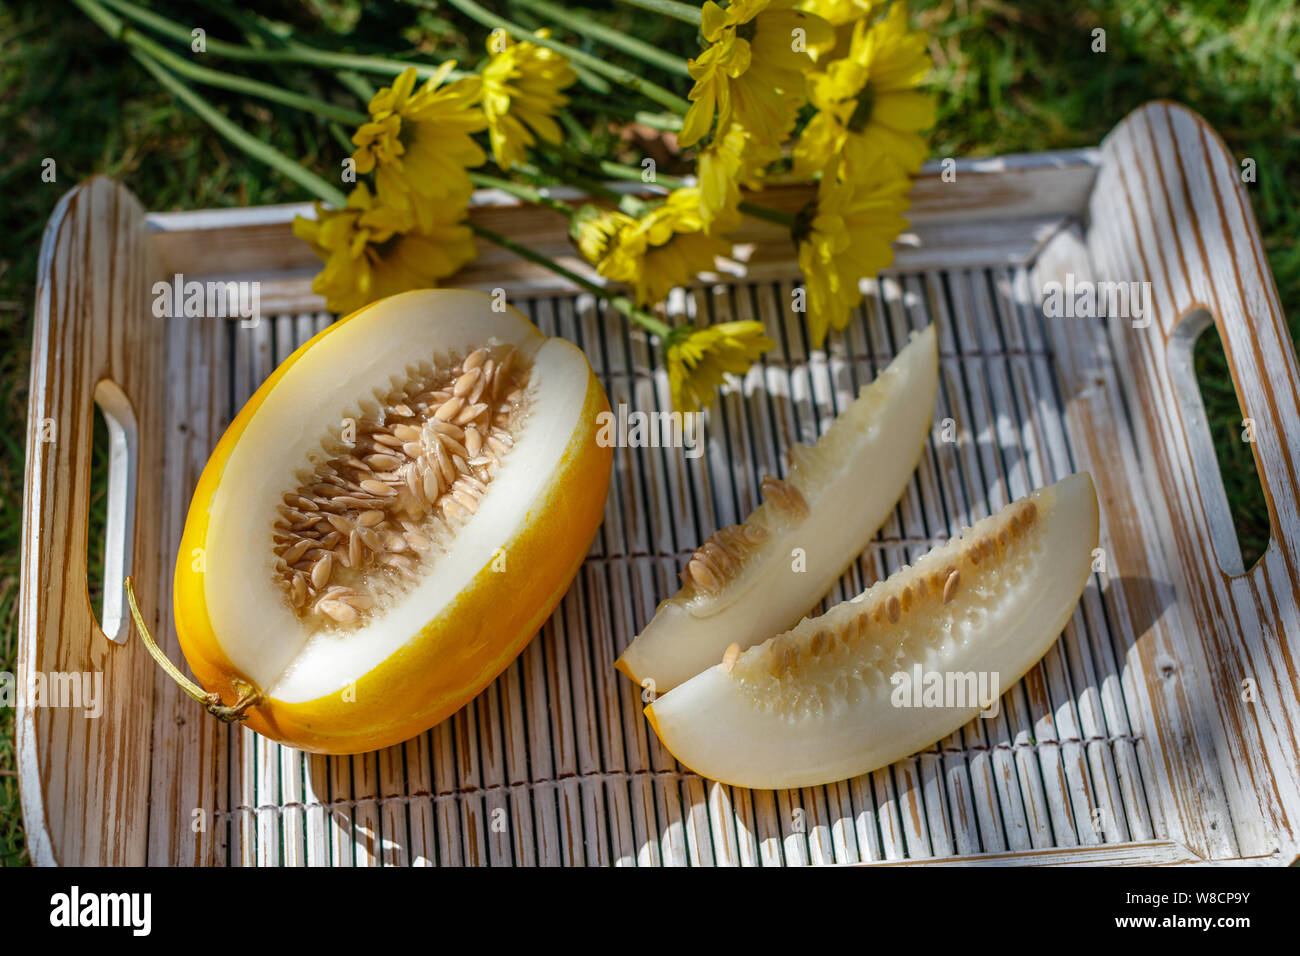 Cut Yellow Oriental melon (Korean melon)  on a white wooden tray. Yellow Chrysanthemum on the background. Stock Photo